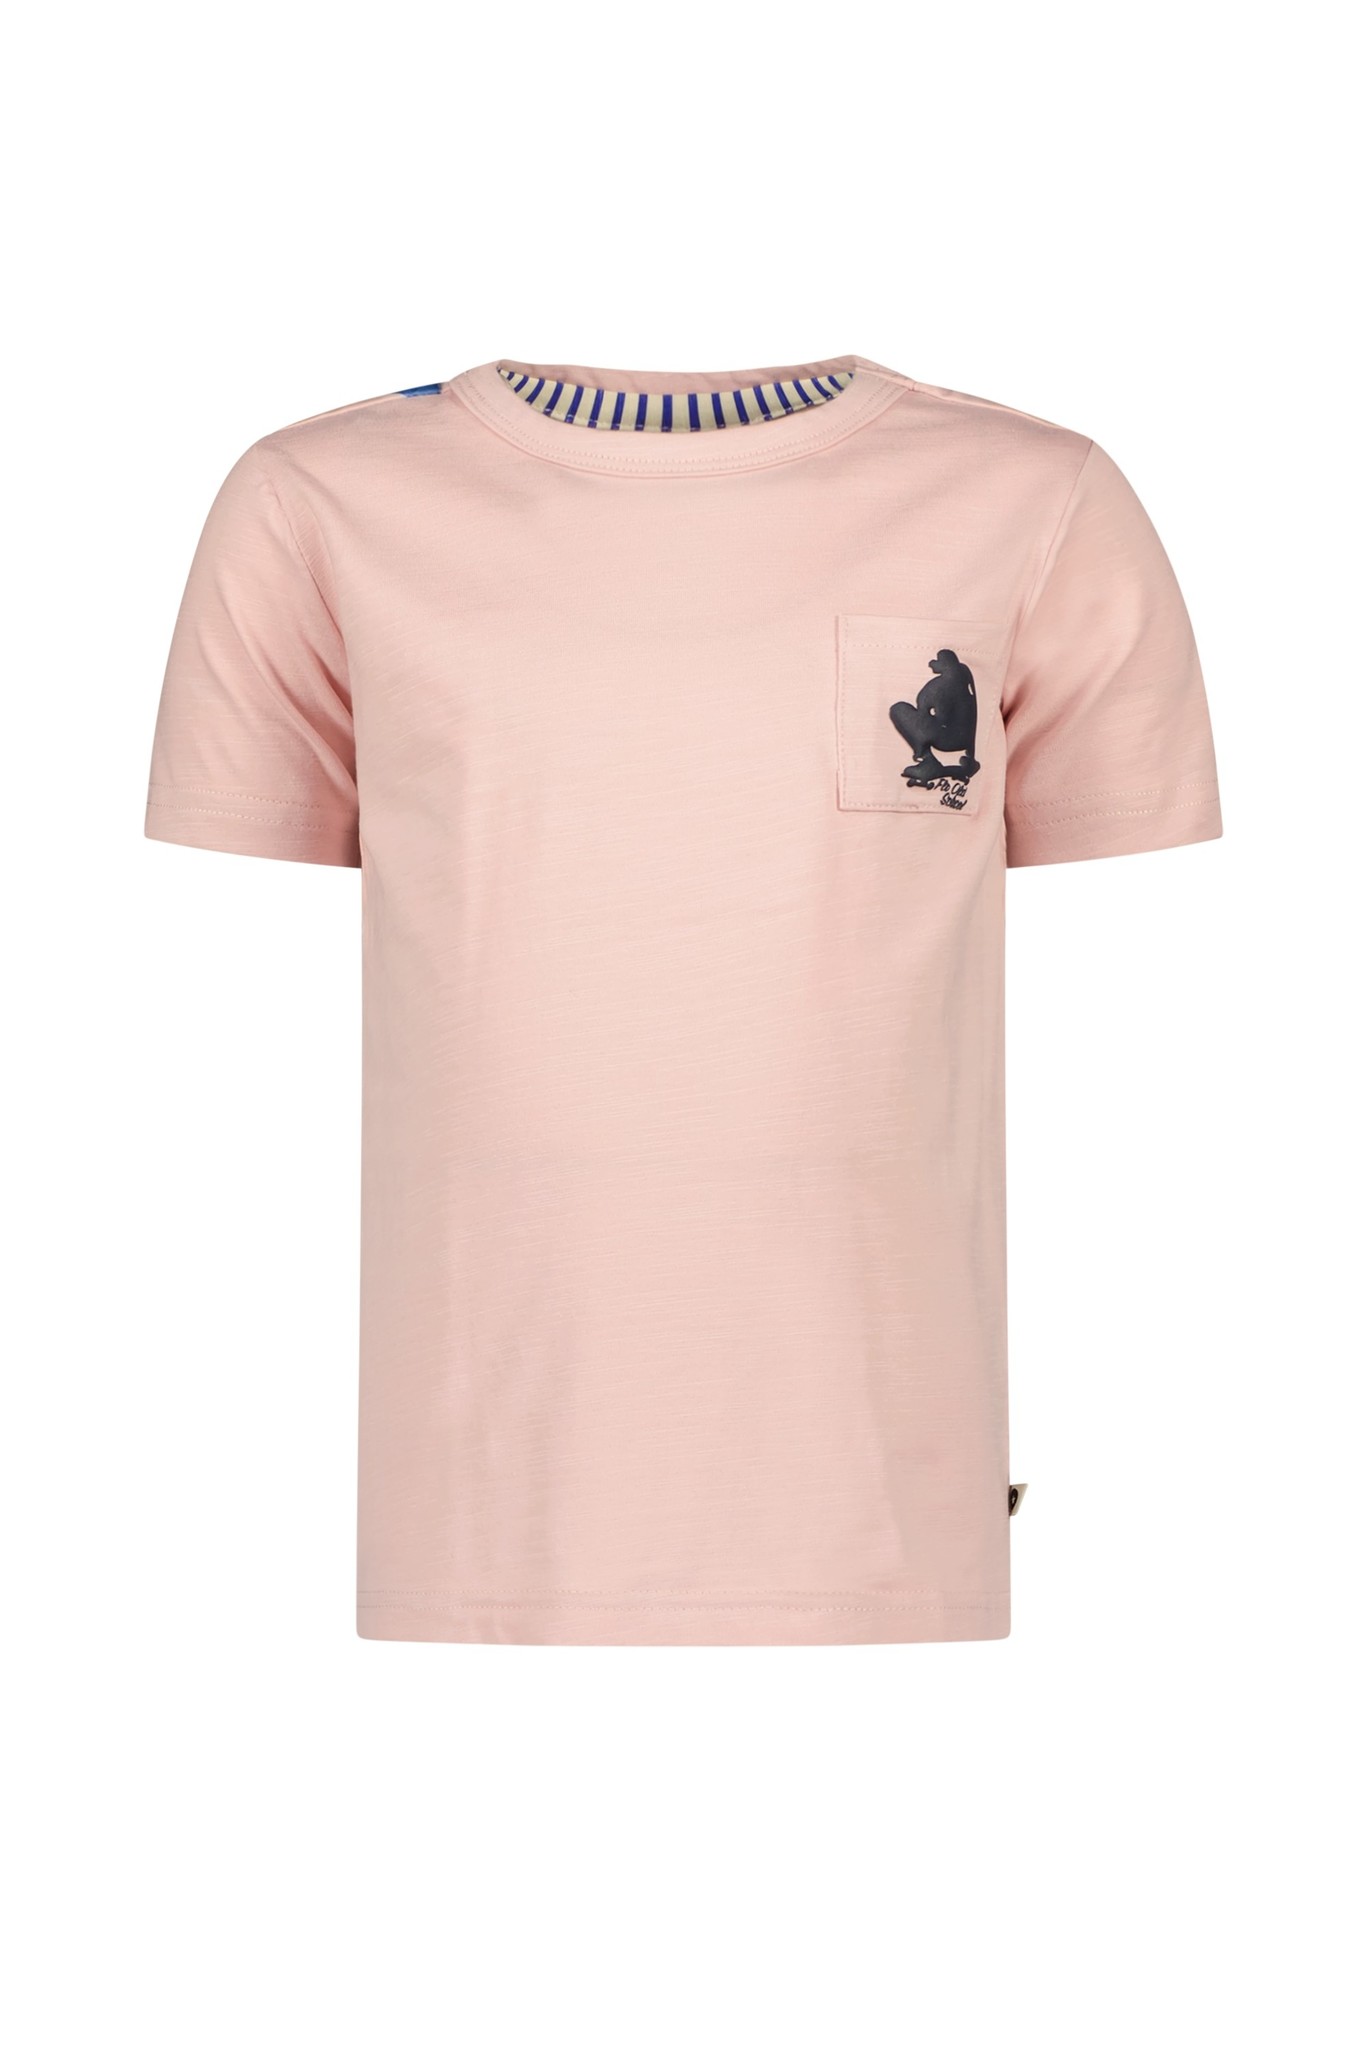 Like Flo - T-Shirt - Old pink - Maat 122